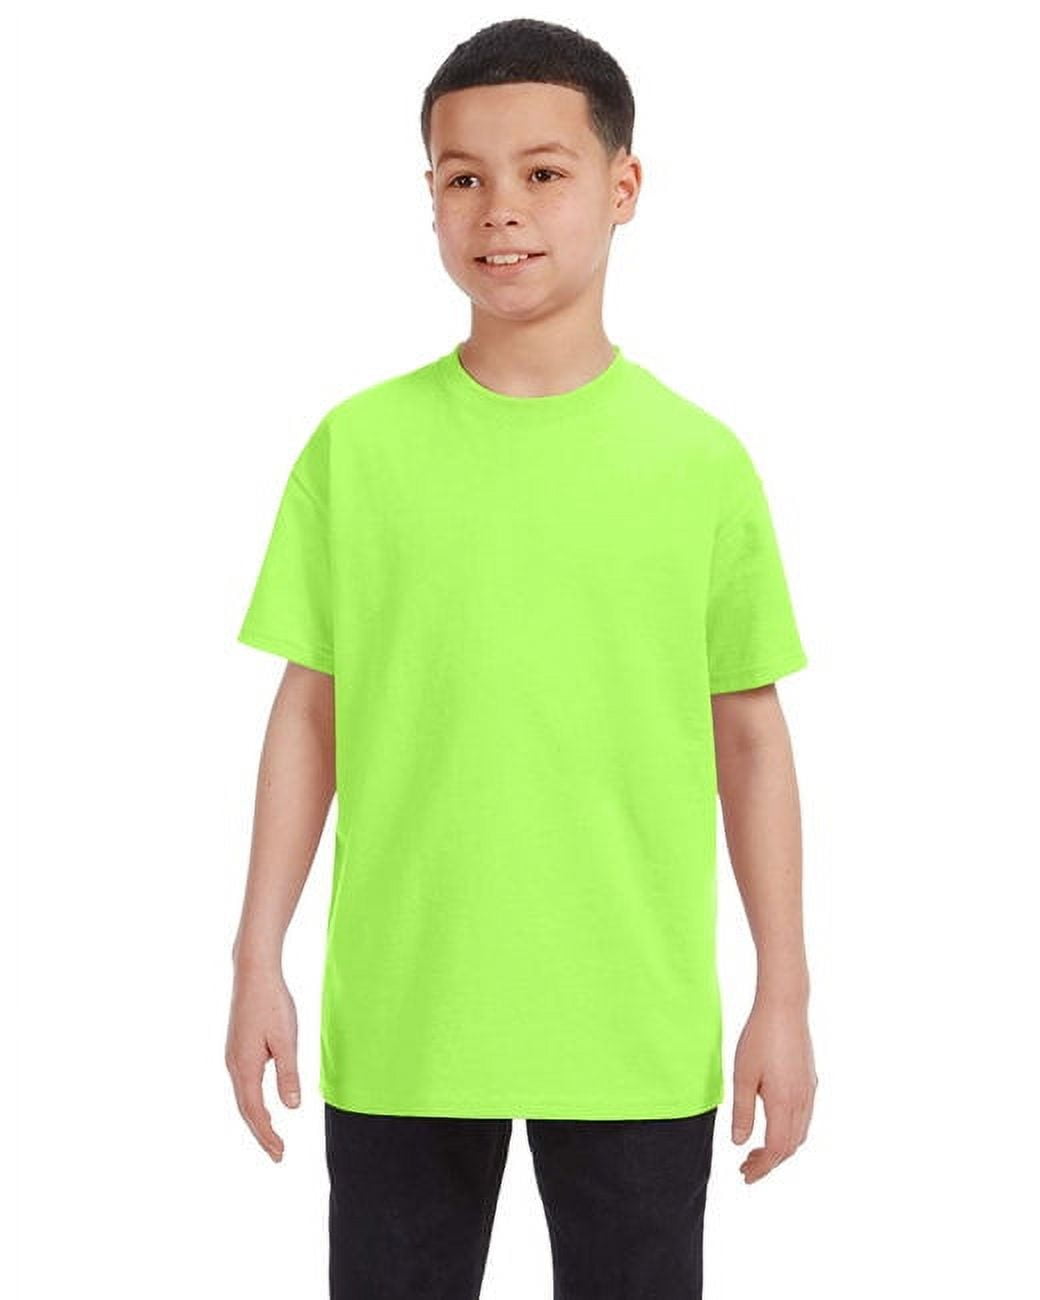 Cotton Gildan Boys Youth Green Pack XS Heavy Neon T-Shirt, 3